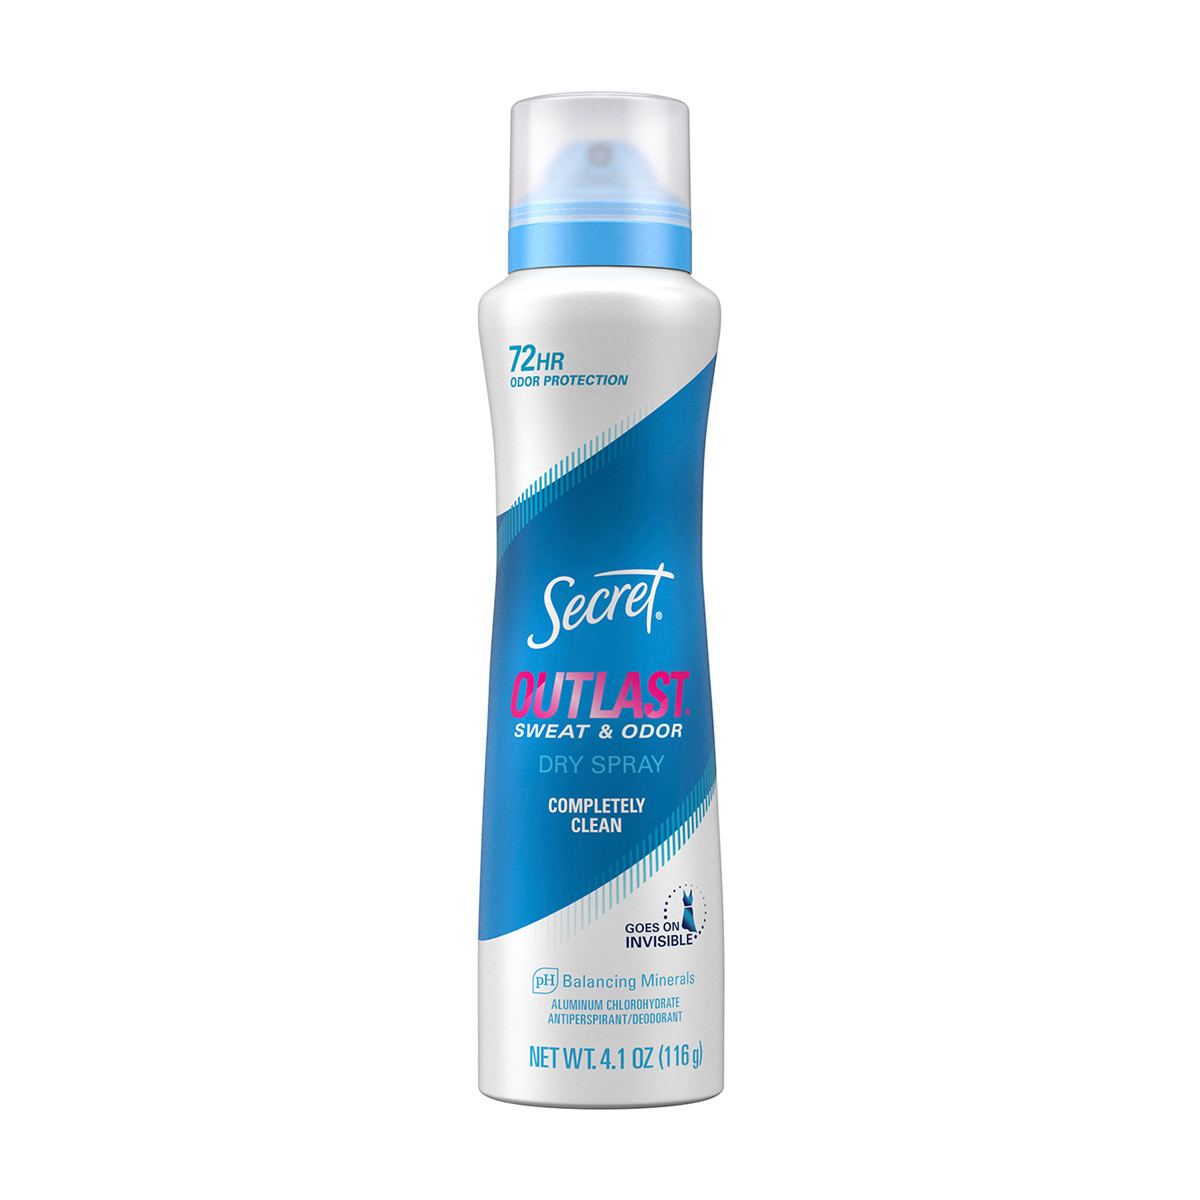 Secret Outlast Dry Spray Antiperspirant & Deodorant, Clean, 4.1 oz